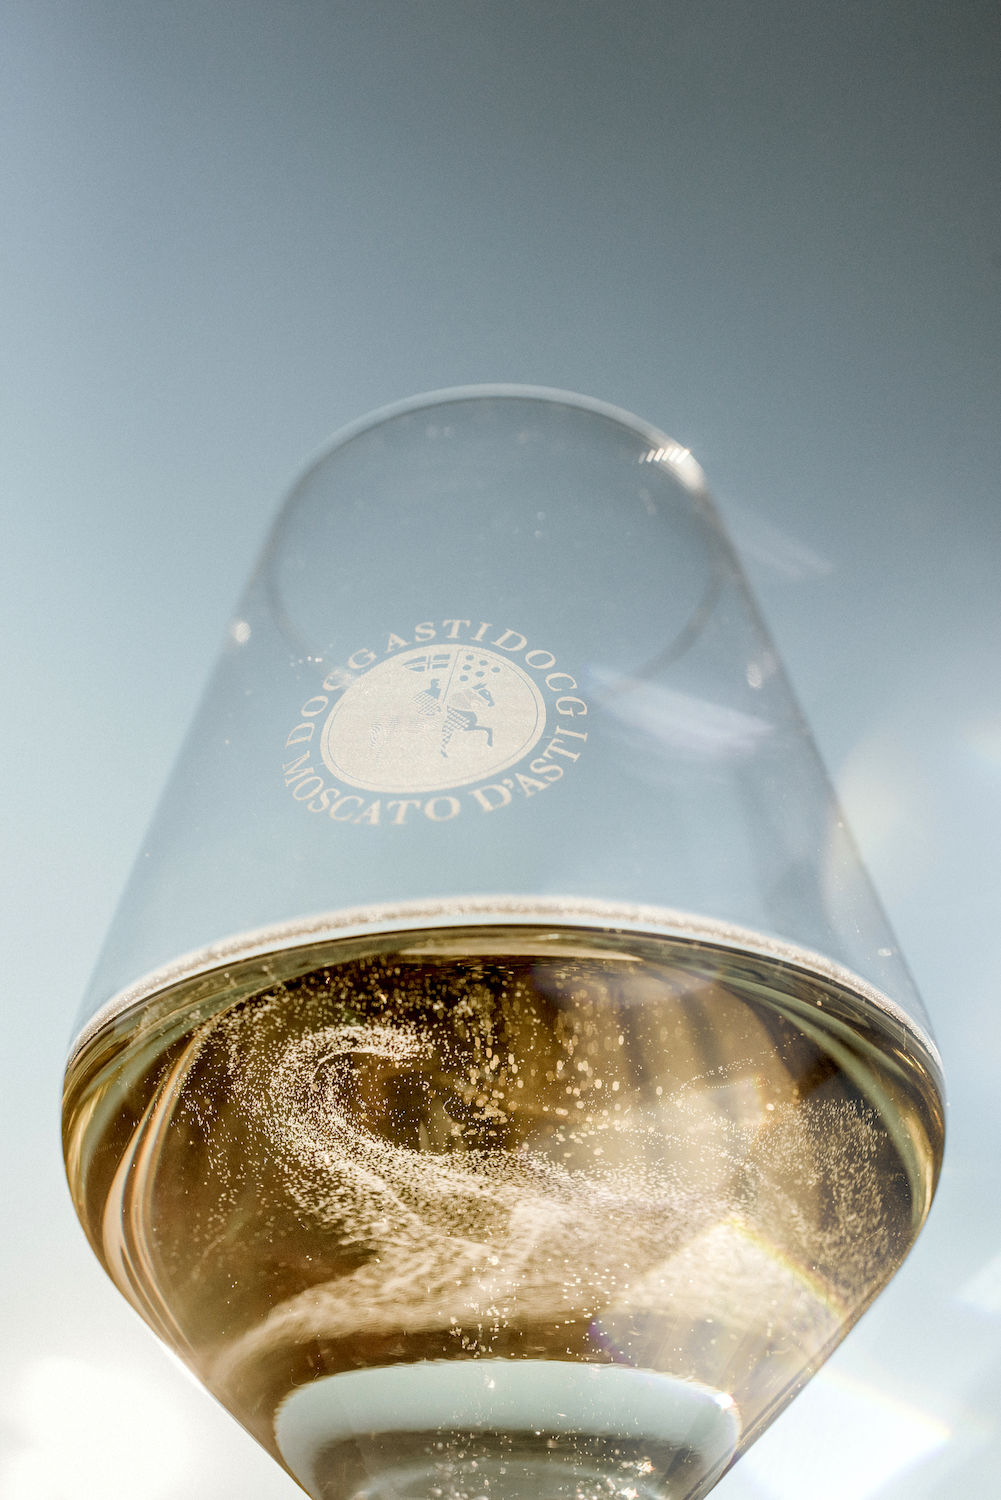 A glass of the Moscato d’Asti glistening like gold under the Italian sun